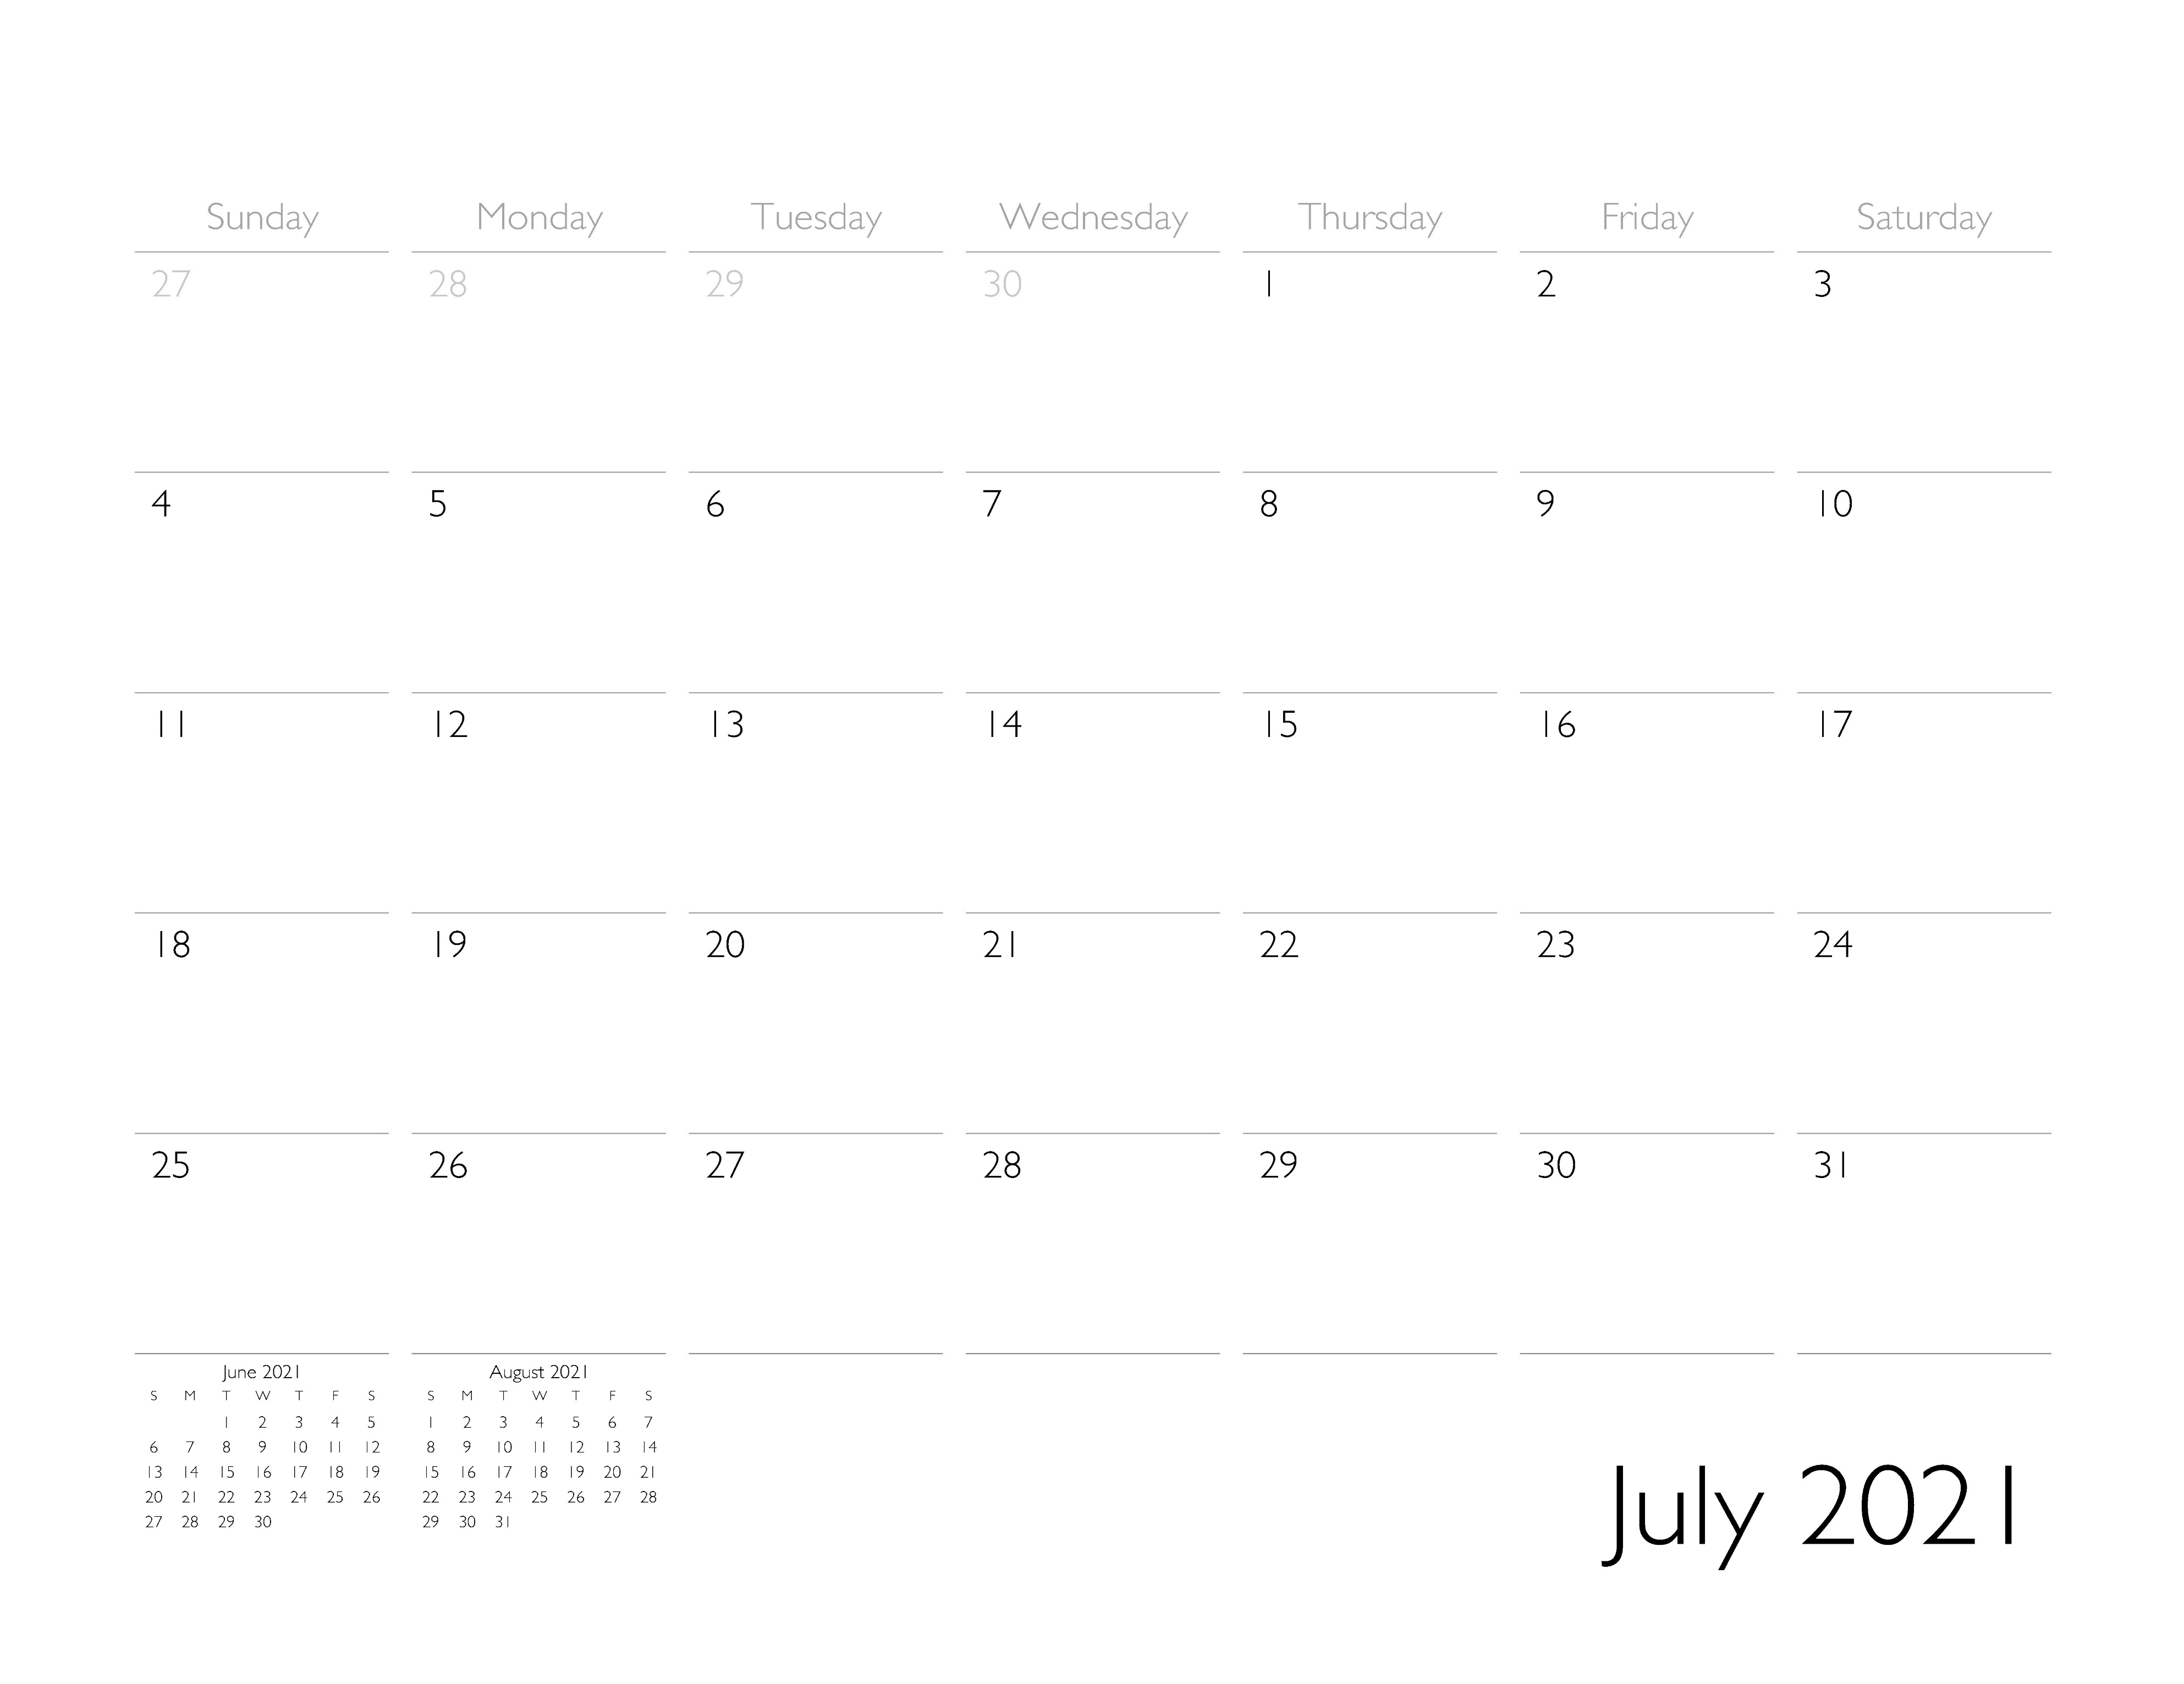 July 2021 Calendar Page